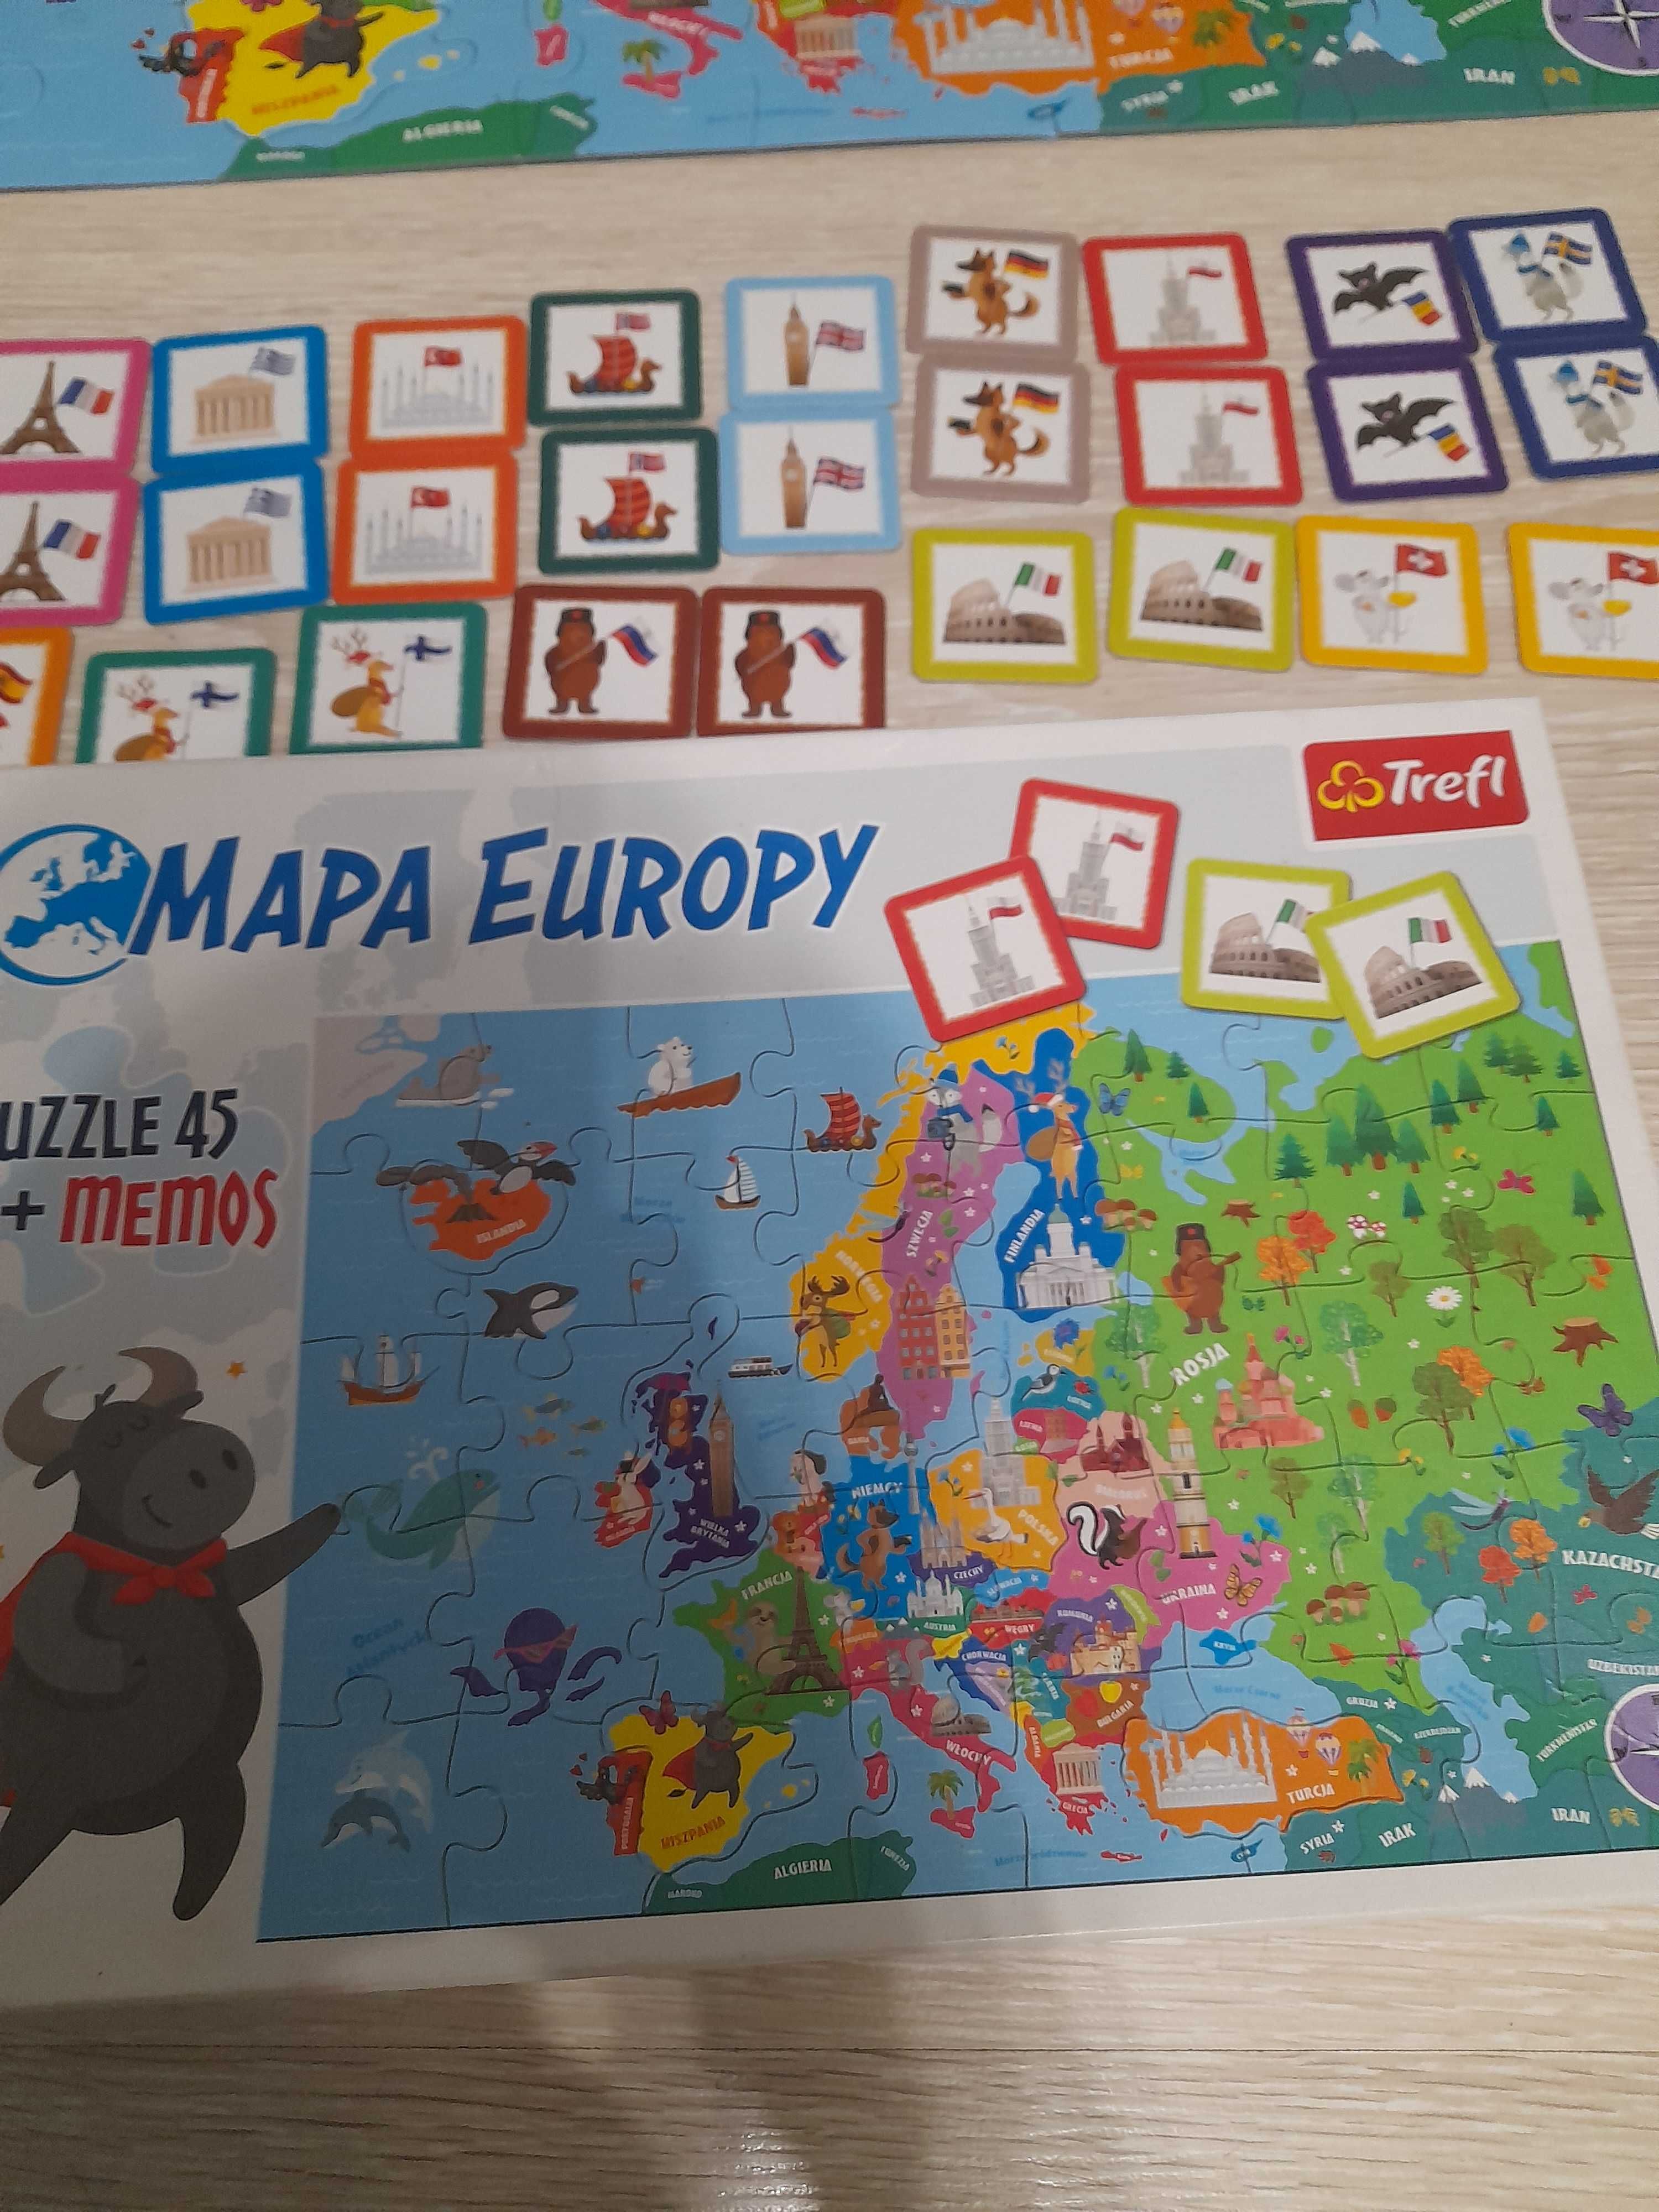 Puzzle 45 + memory Mapa Europy